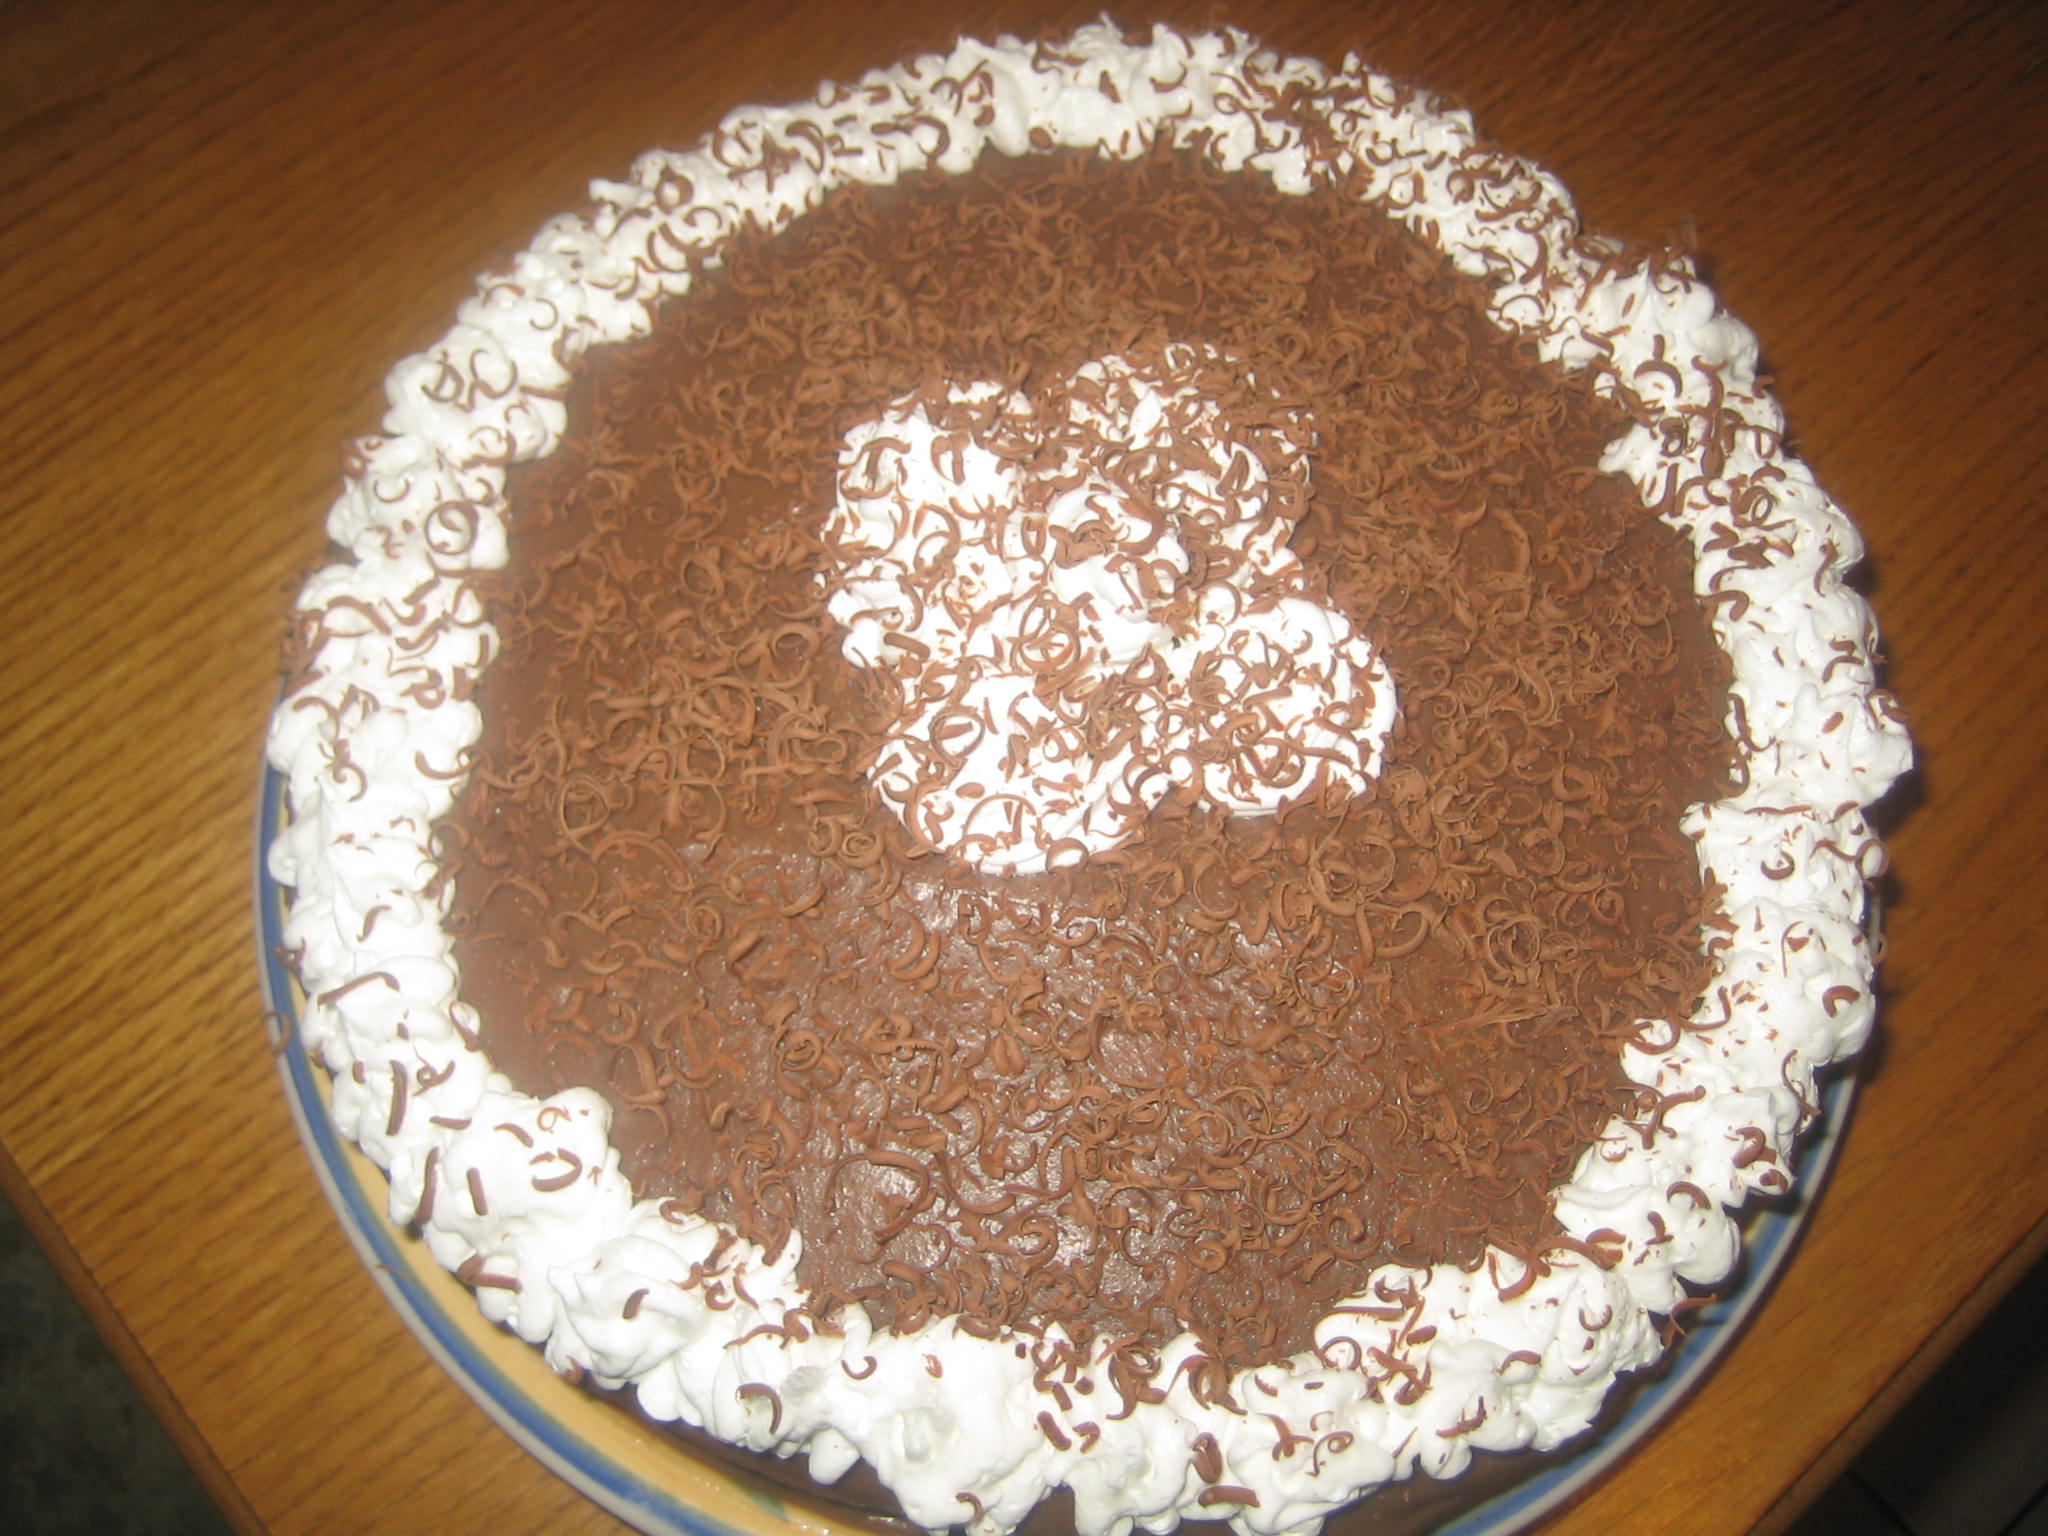 Tort de ciocolata cu visine